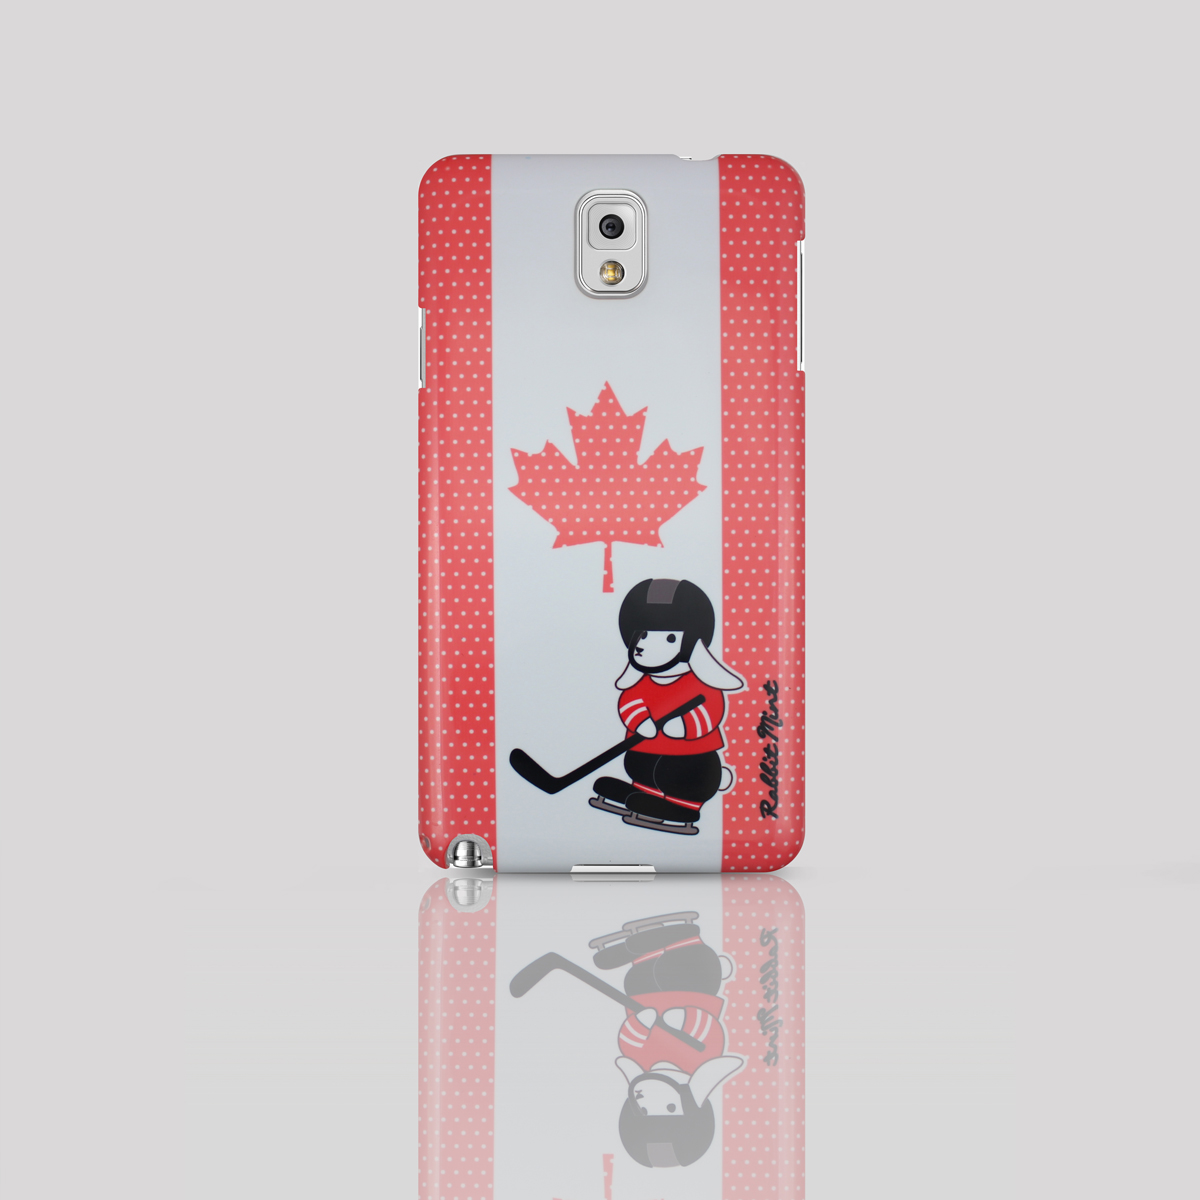 Samsung Galaxy Note 3 Case - Bunny Love Travel - Canada (00060-n3)